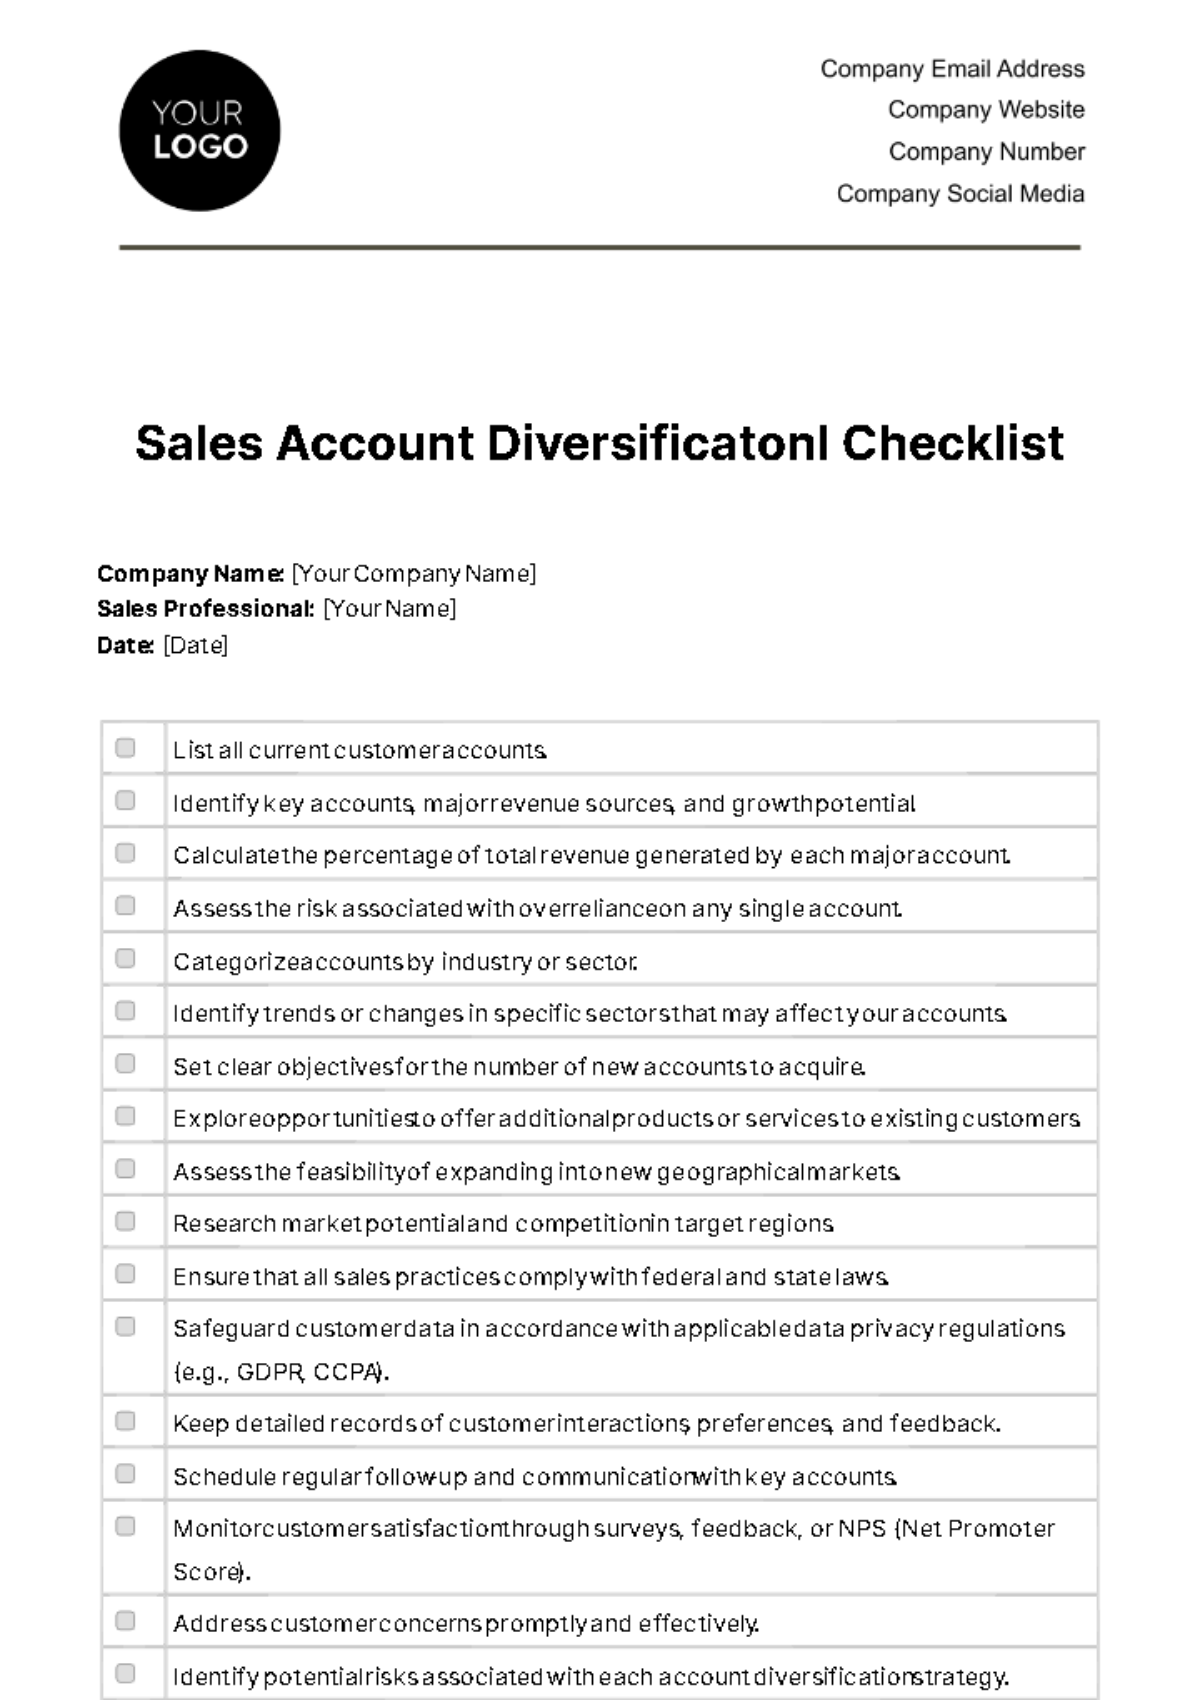 Sales Account Diversification Checklist Template